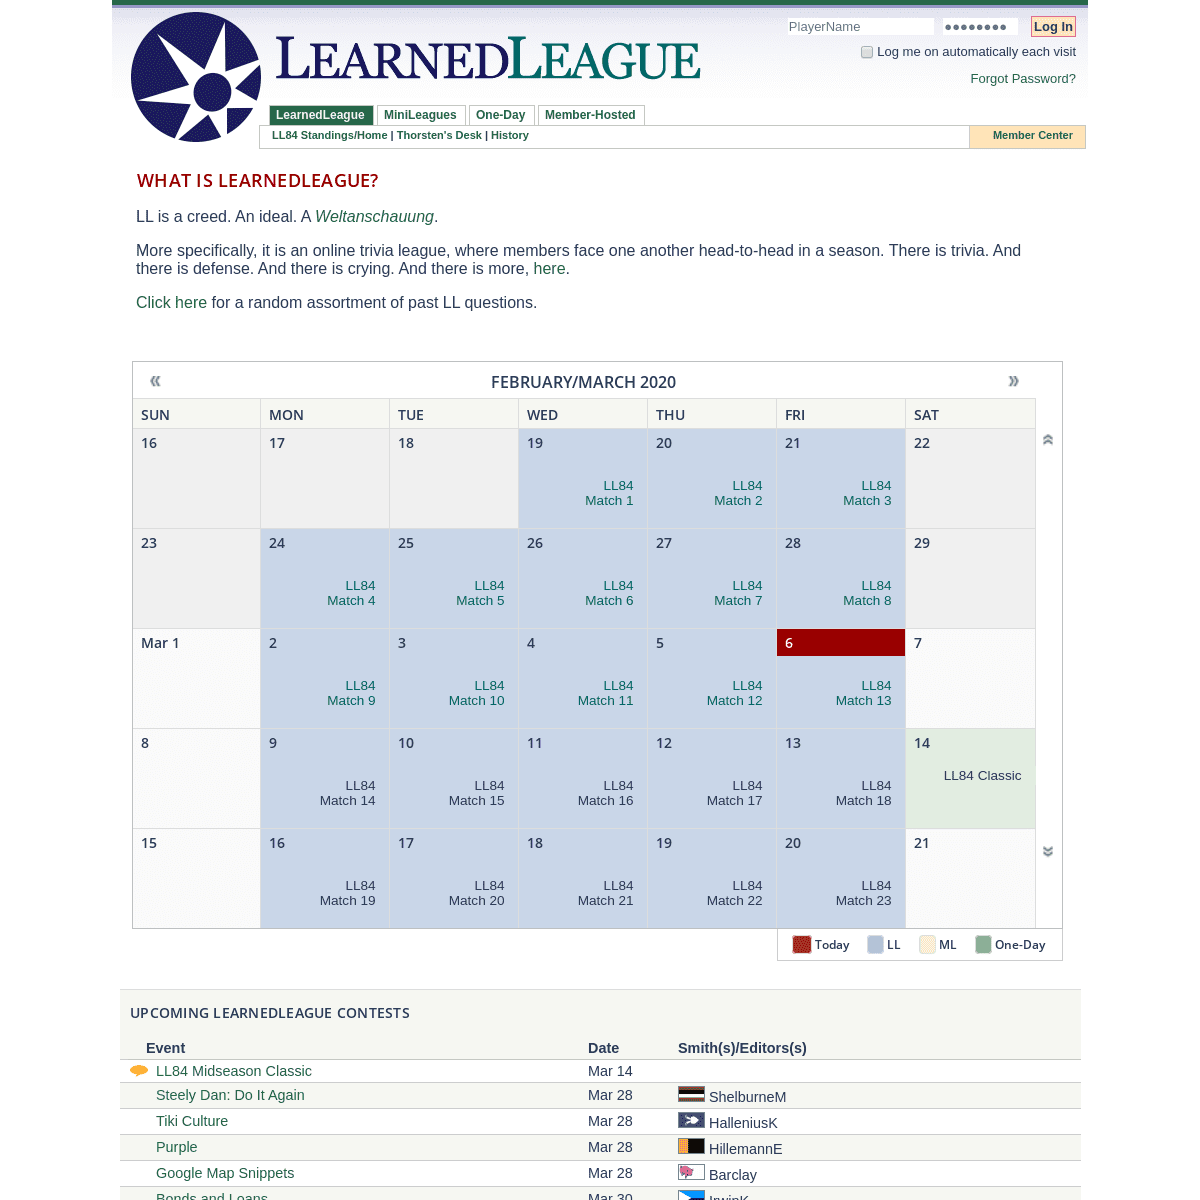 A complete backup of learnedleague.com